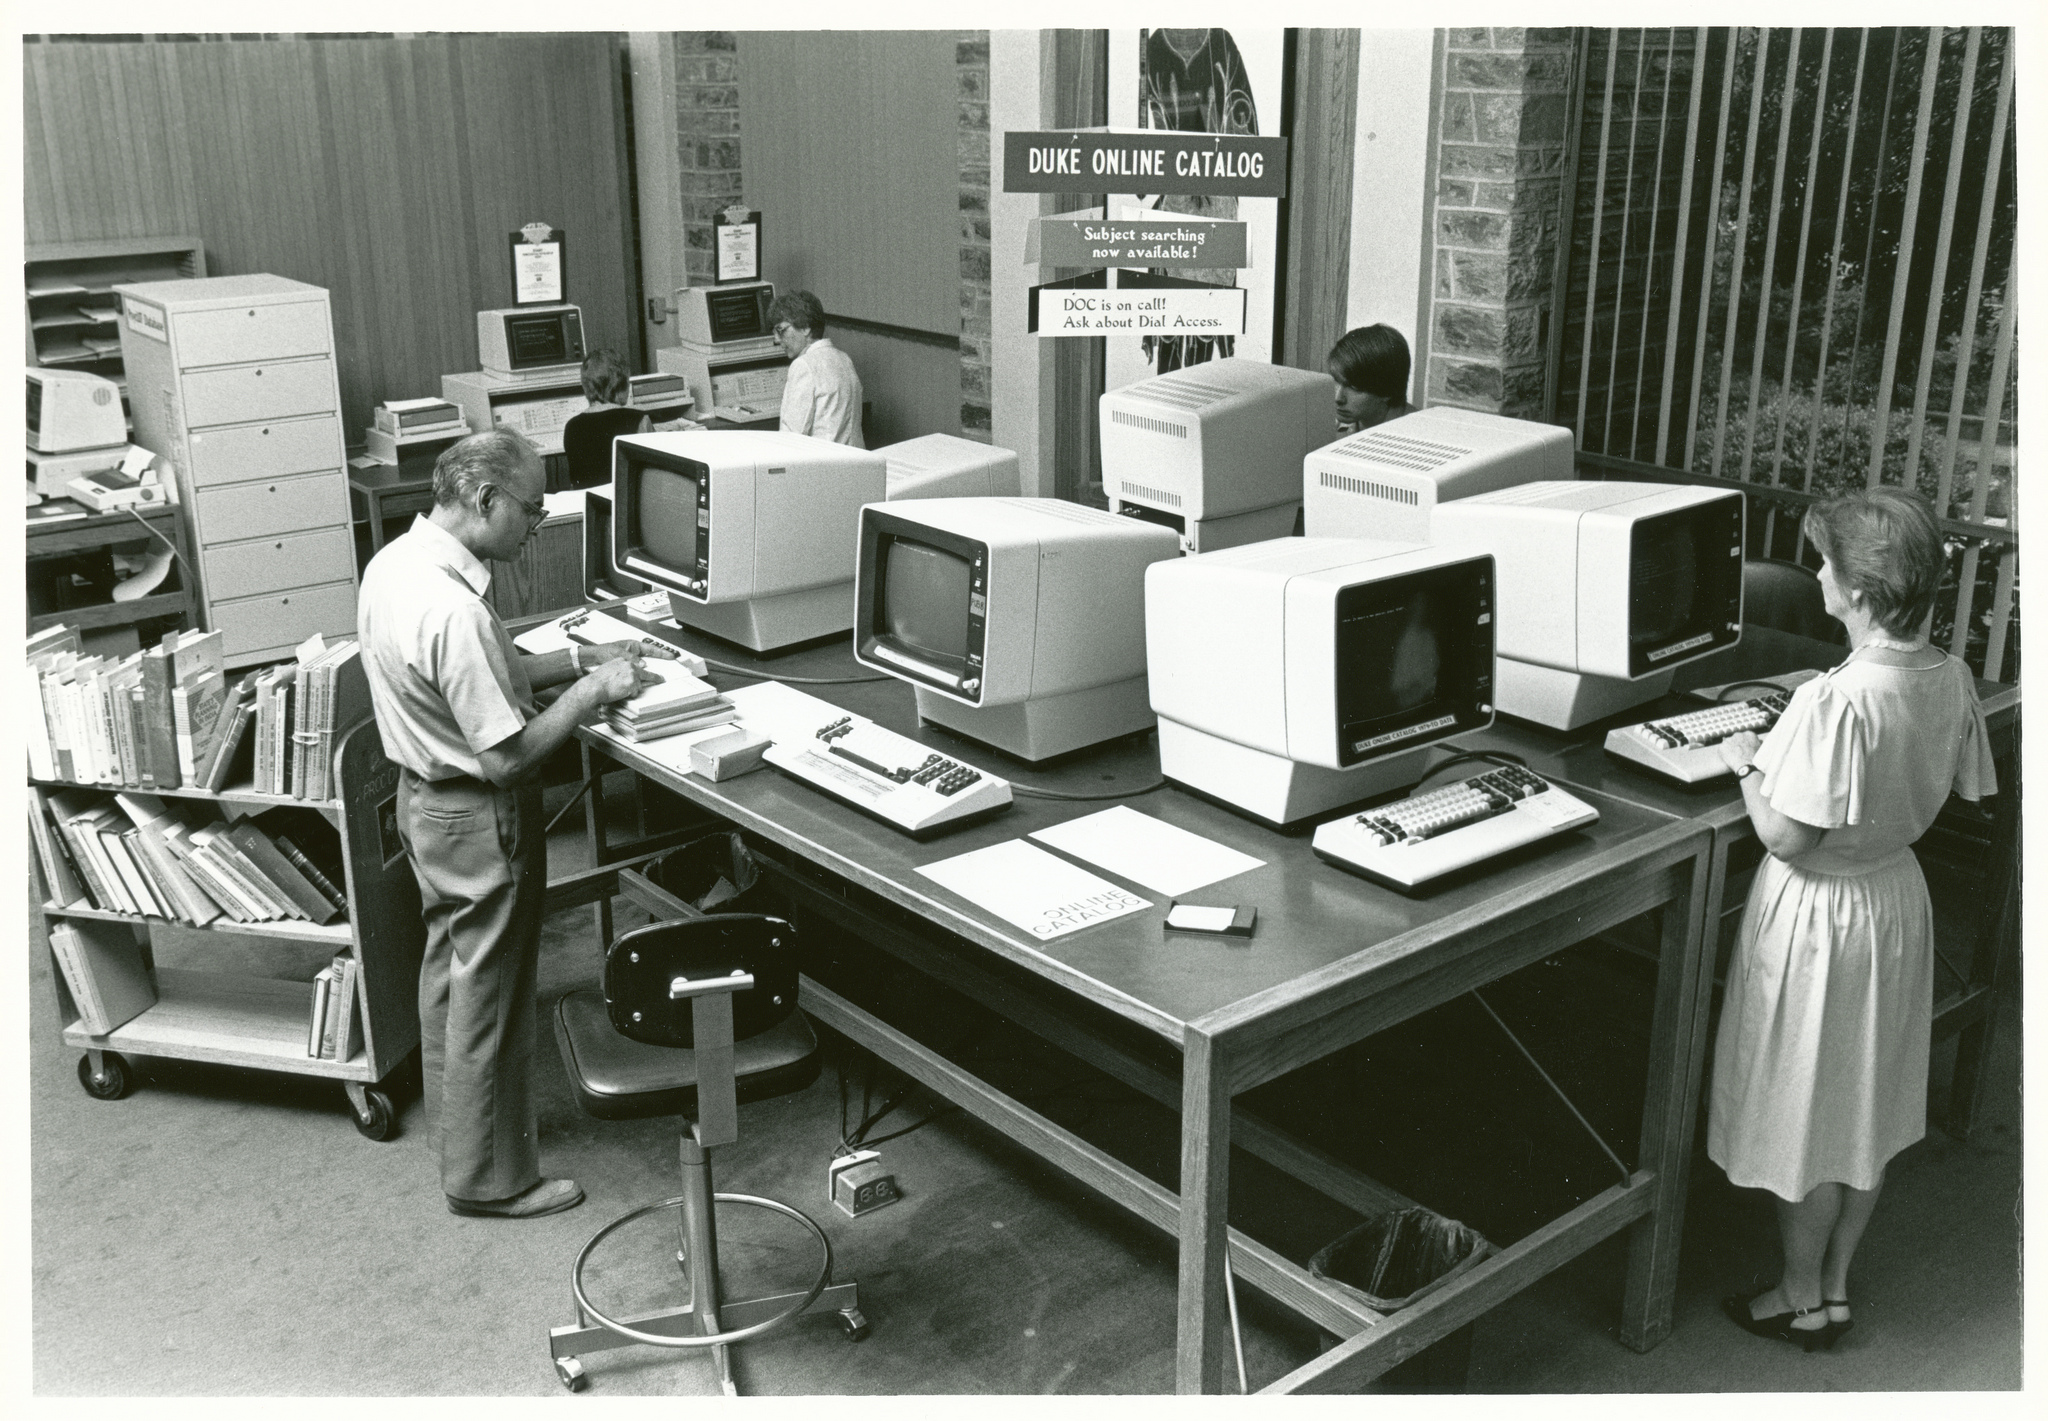 Networks are groups of computers. IBM Computer 1980. Офис 1980. Компьютеры в США В 1980 гг. Компьютеры 1970 -1980.